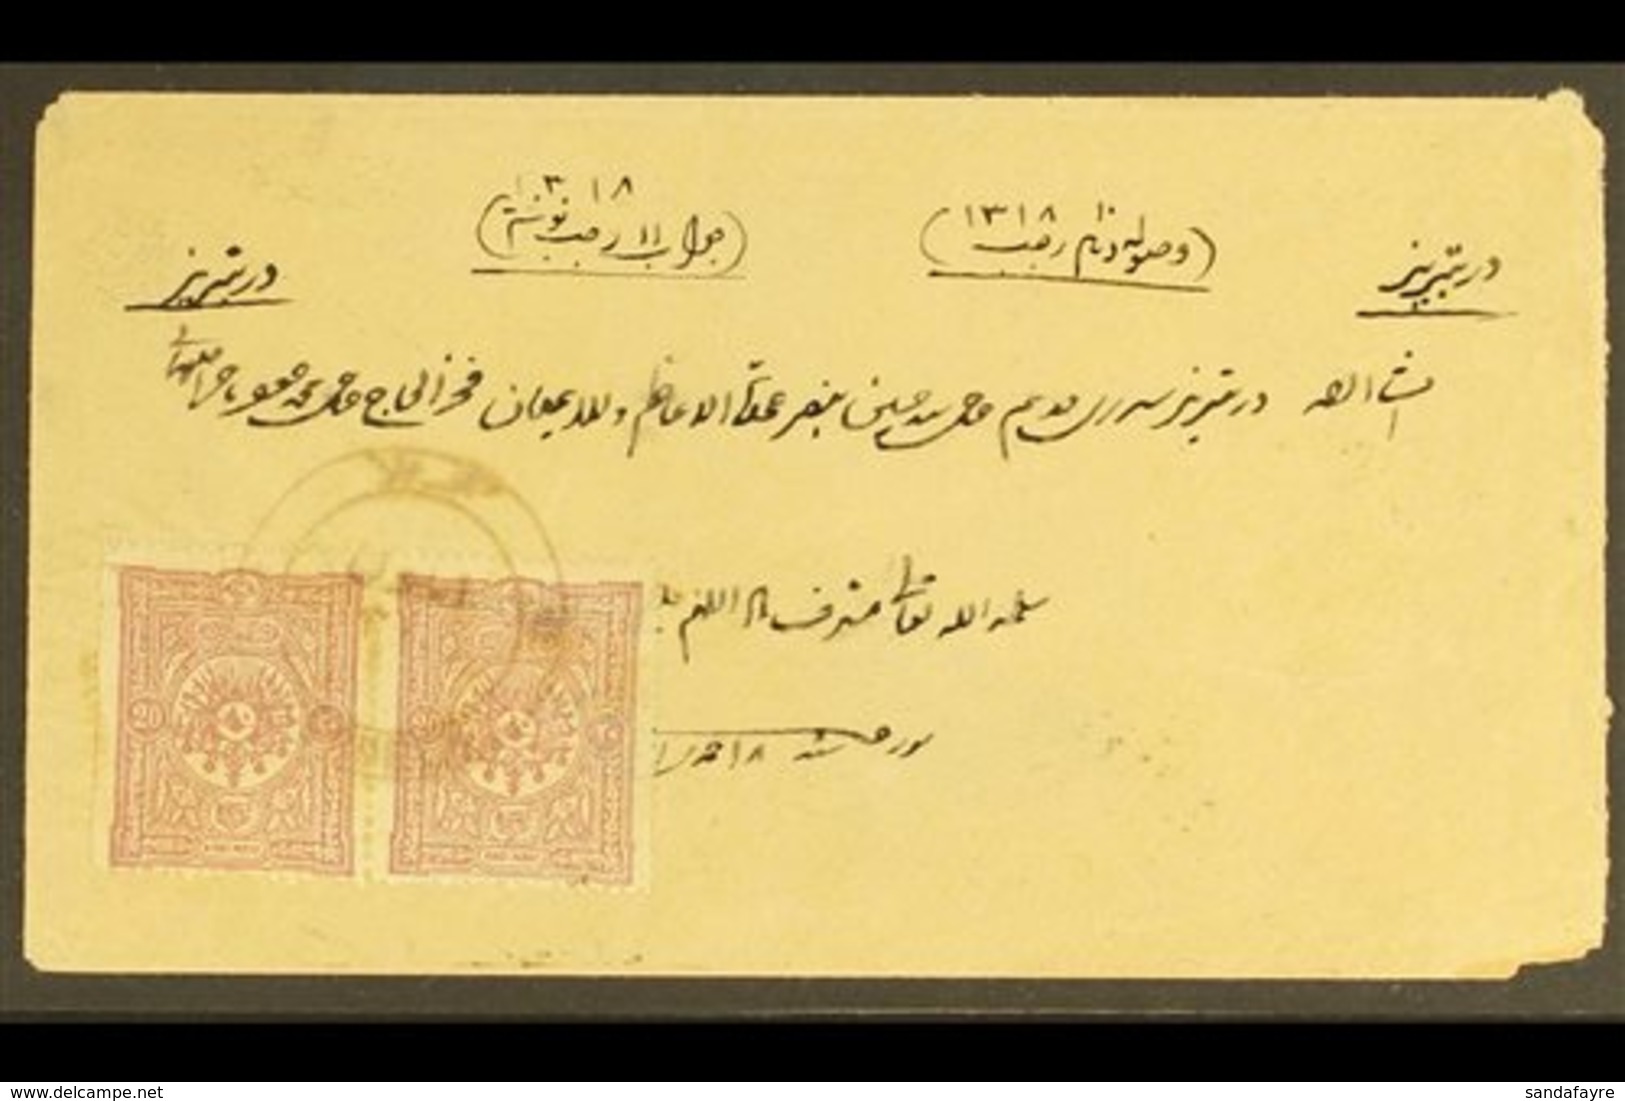 TURKEY USED IN IRAQ  C1900 Env To Persia, Bearing Ottoman 1892 20pa Pair Tied By Fine Upright "KERBELA" Bilingual Star C - Iraq